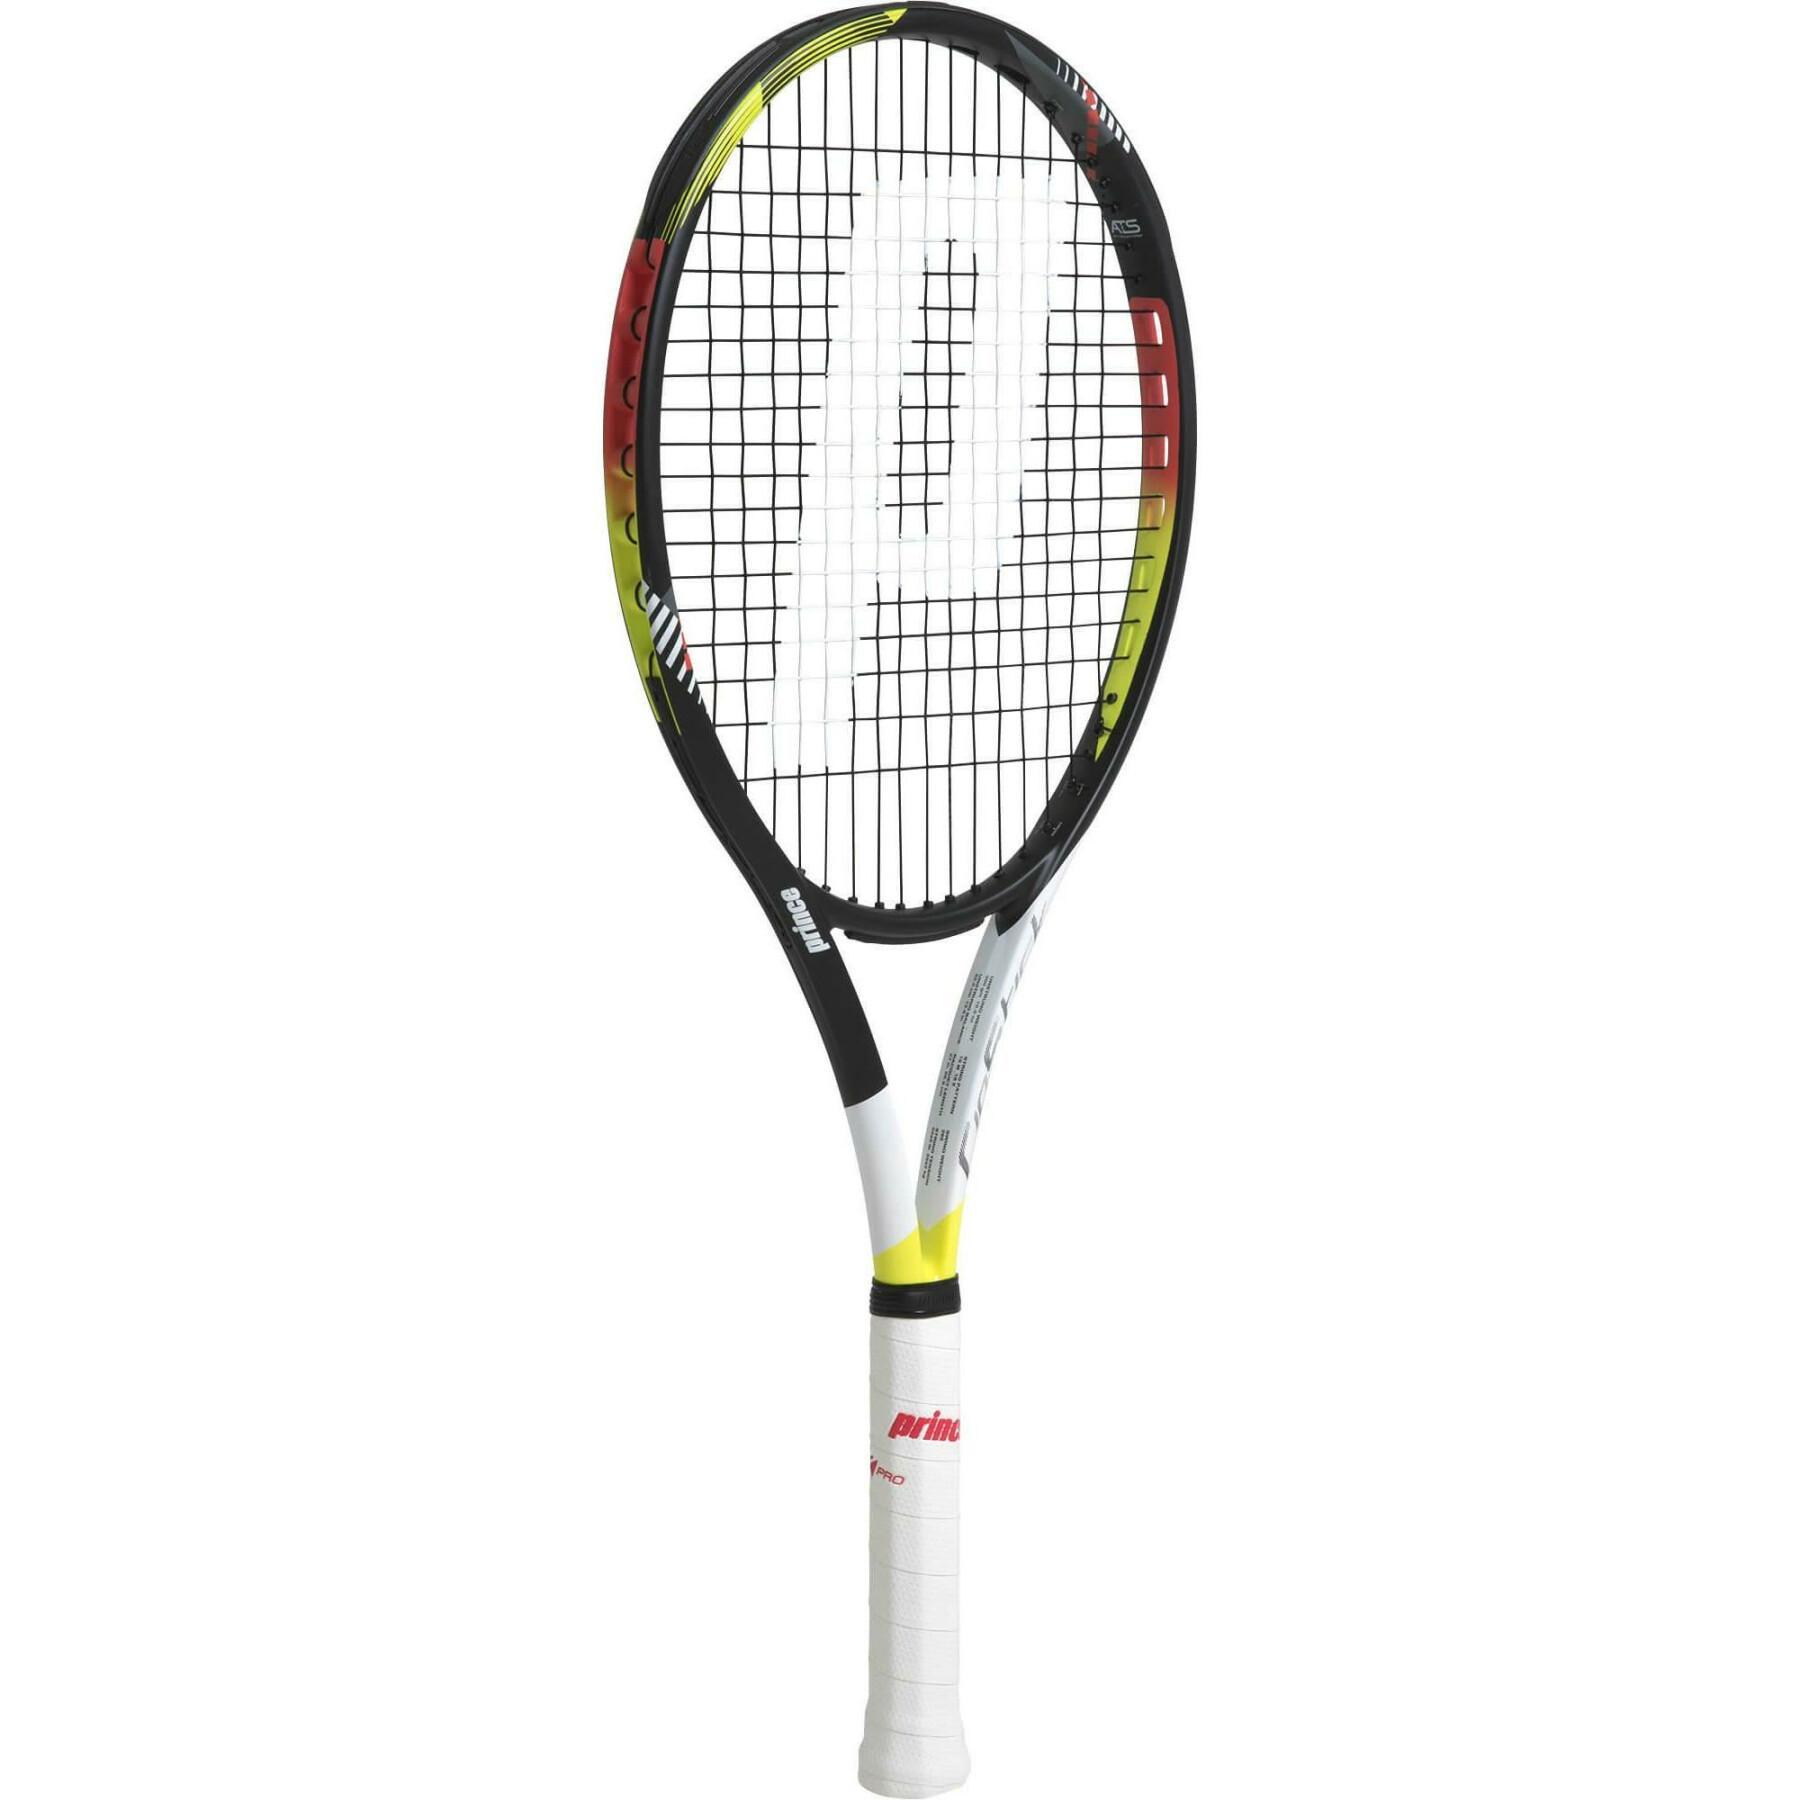 Tennis racket Prince ripstick 100